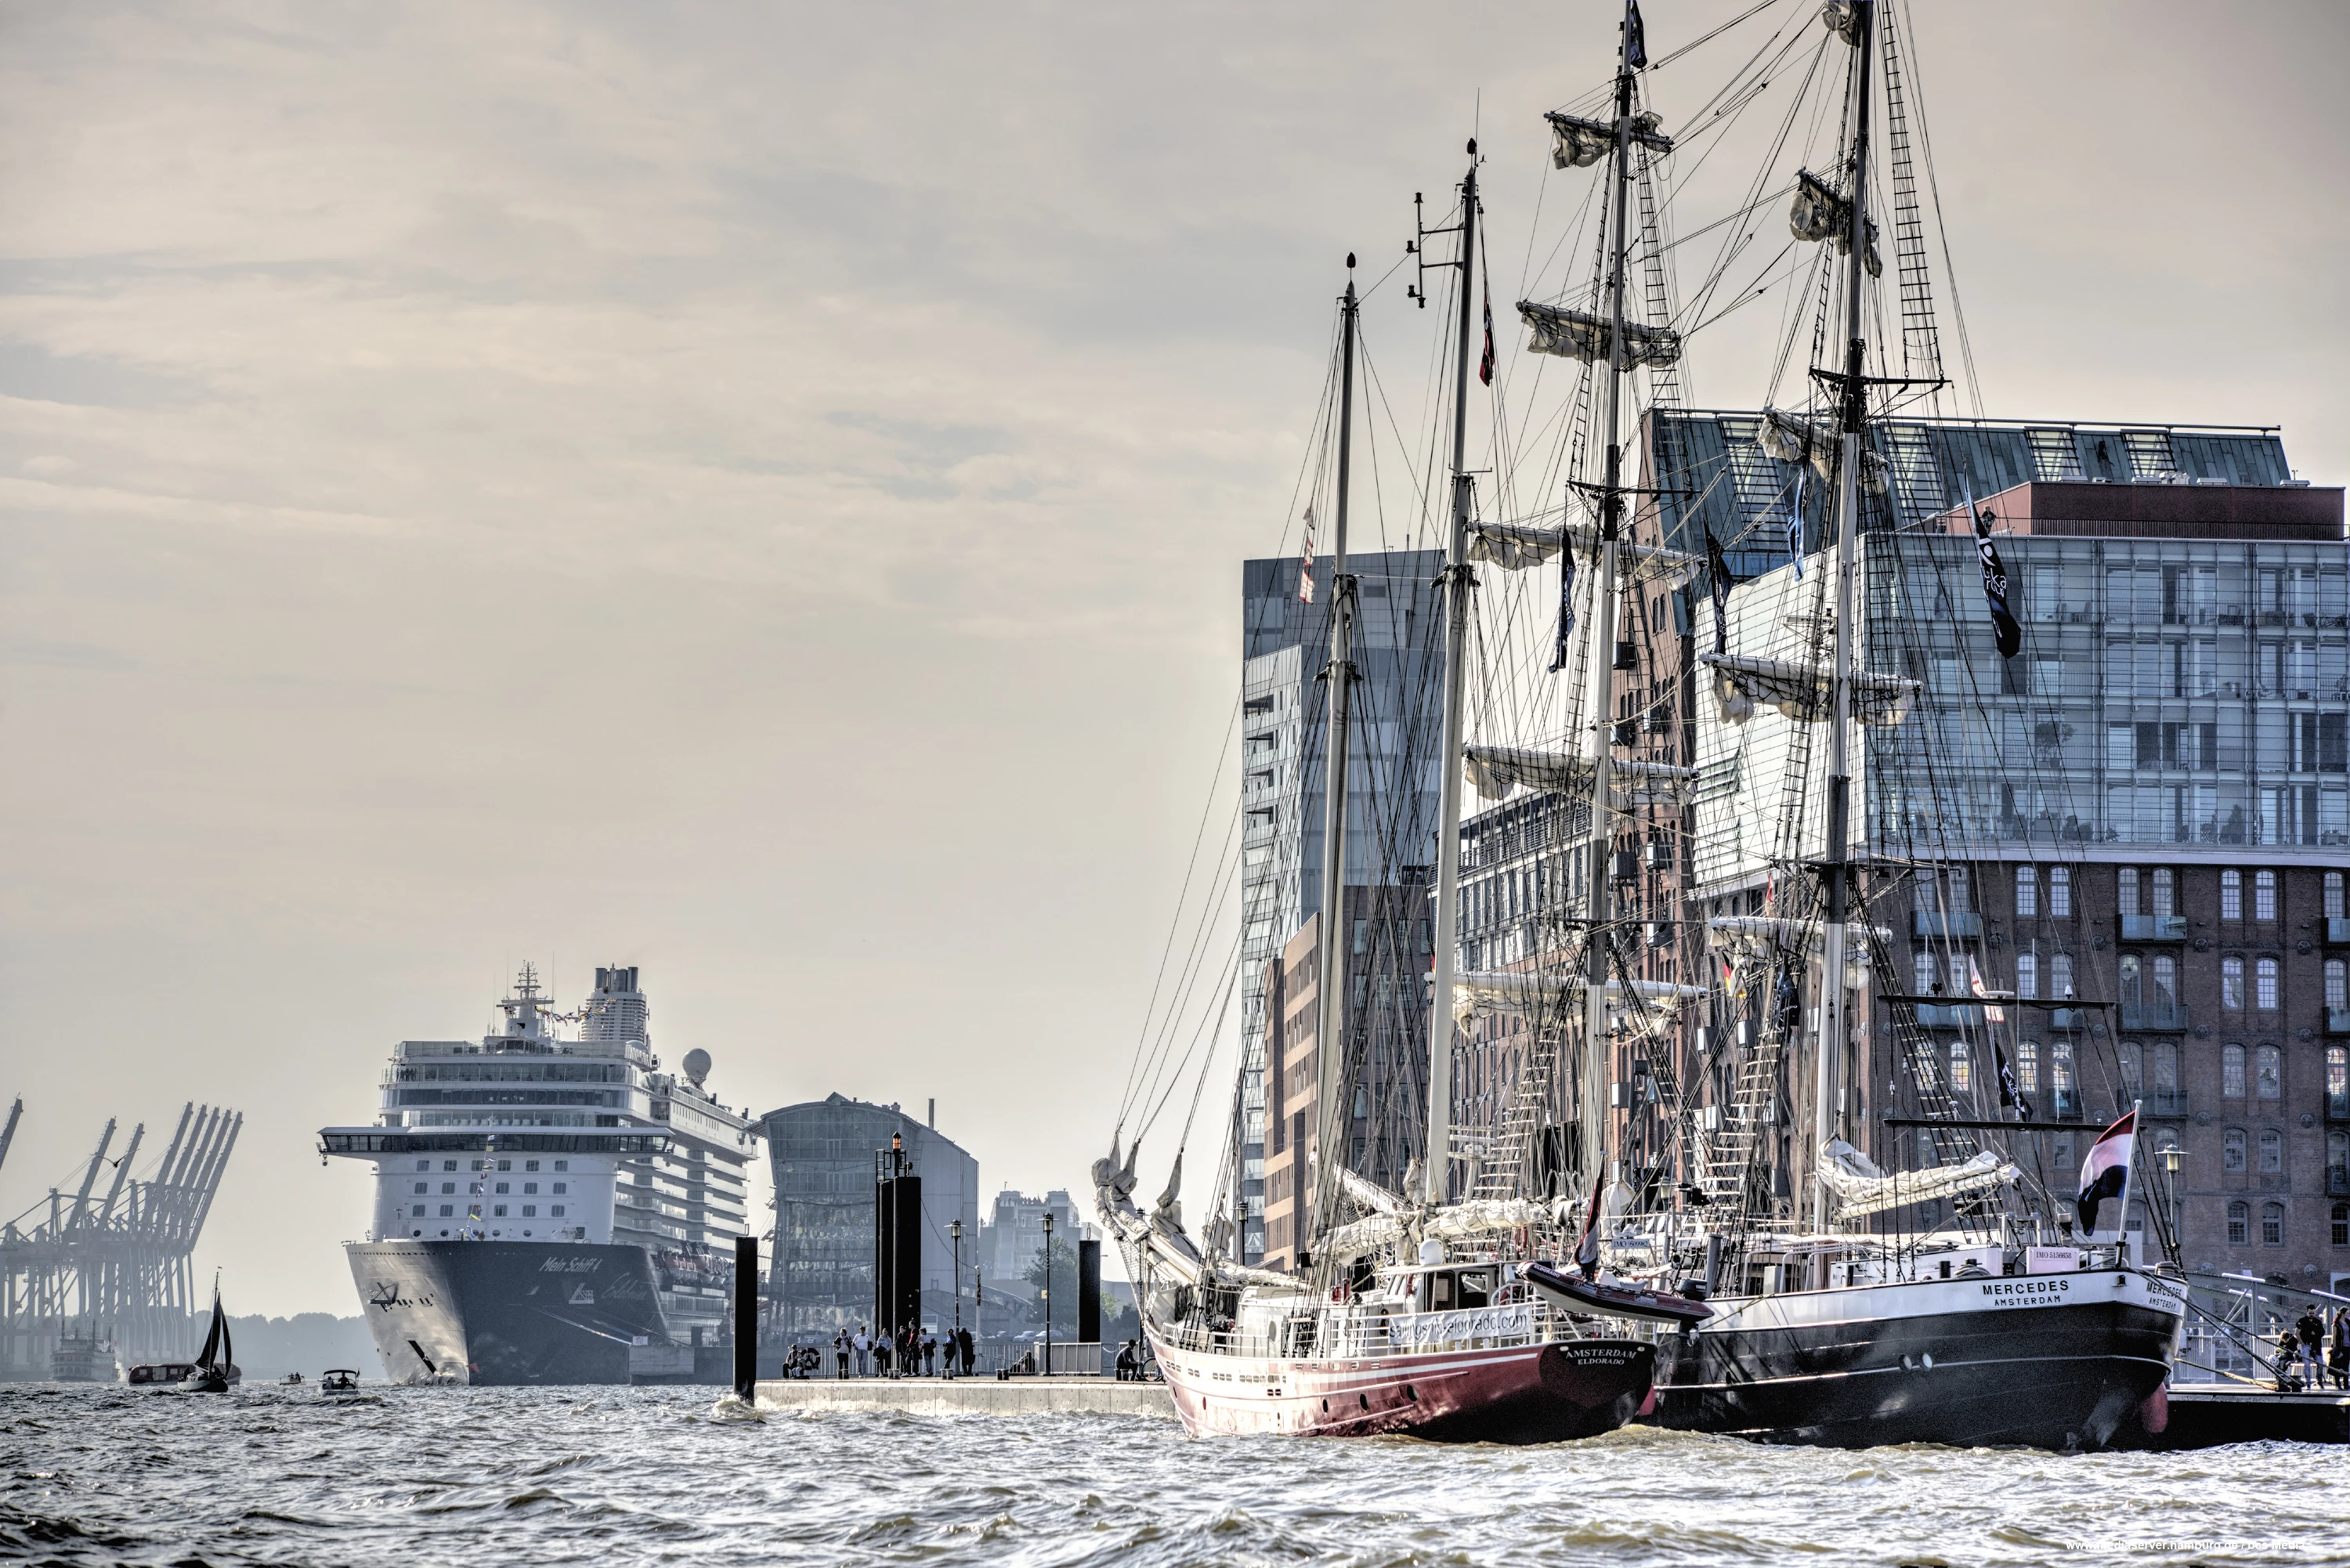 Hamburg - a hub for maritime events